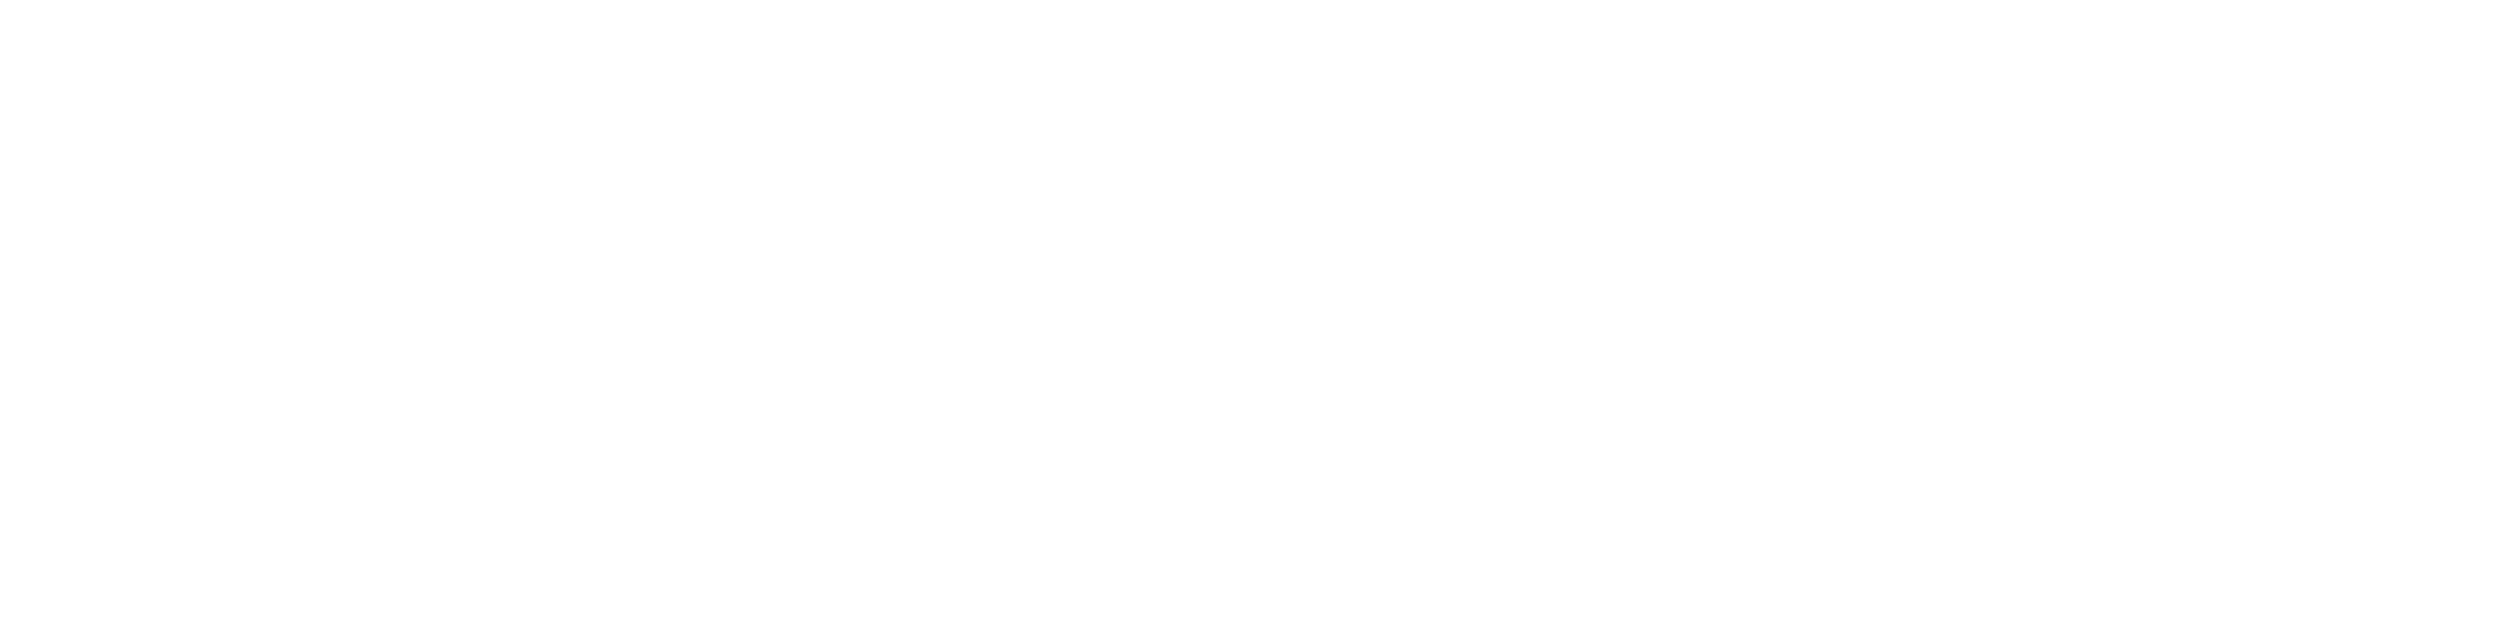 garrett hamilton photography logos.png